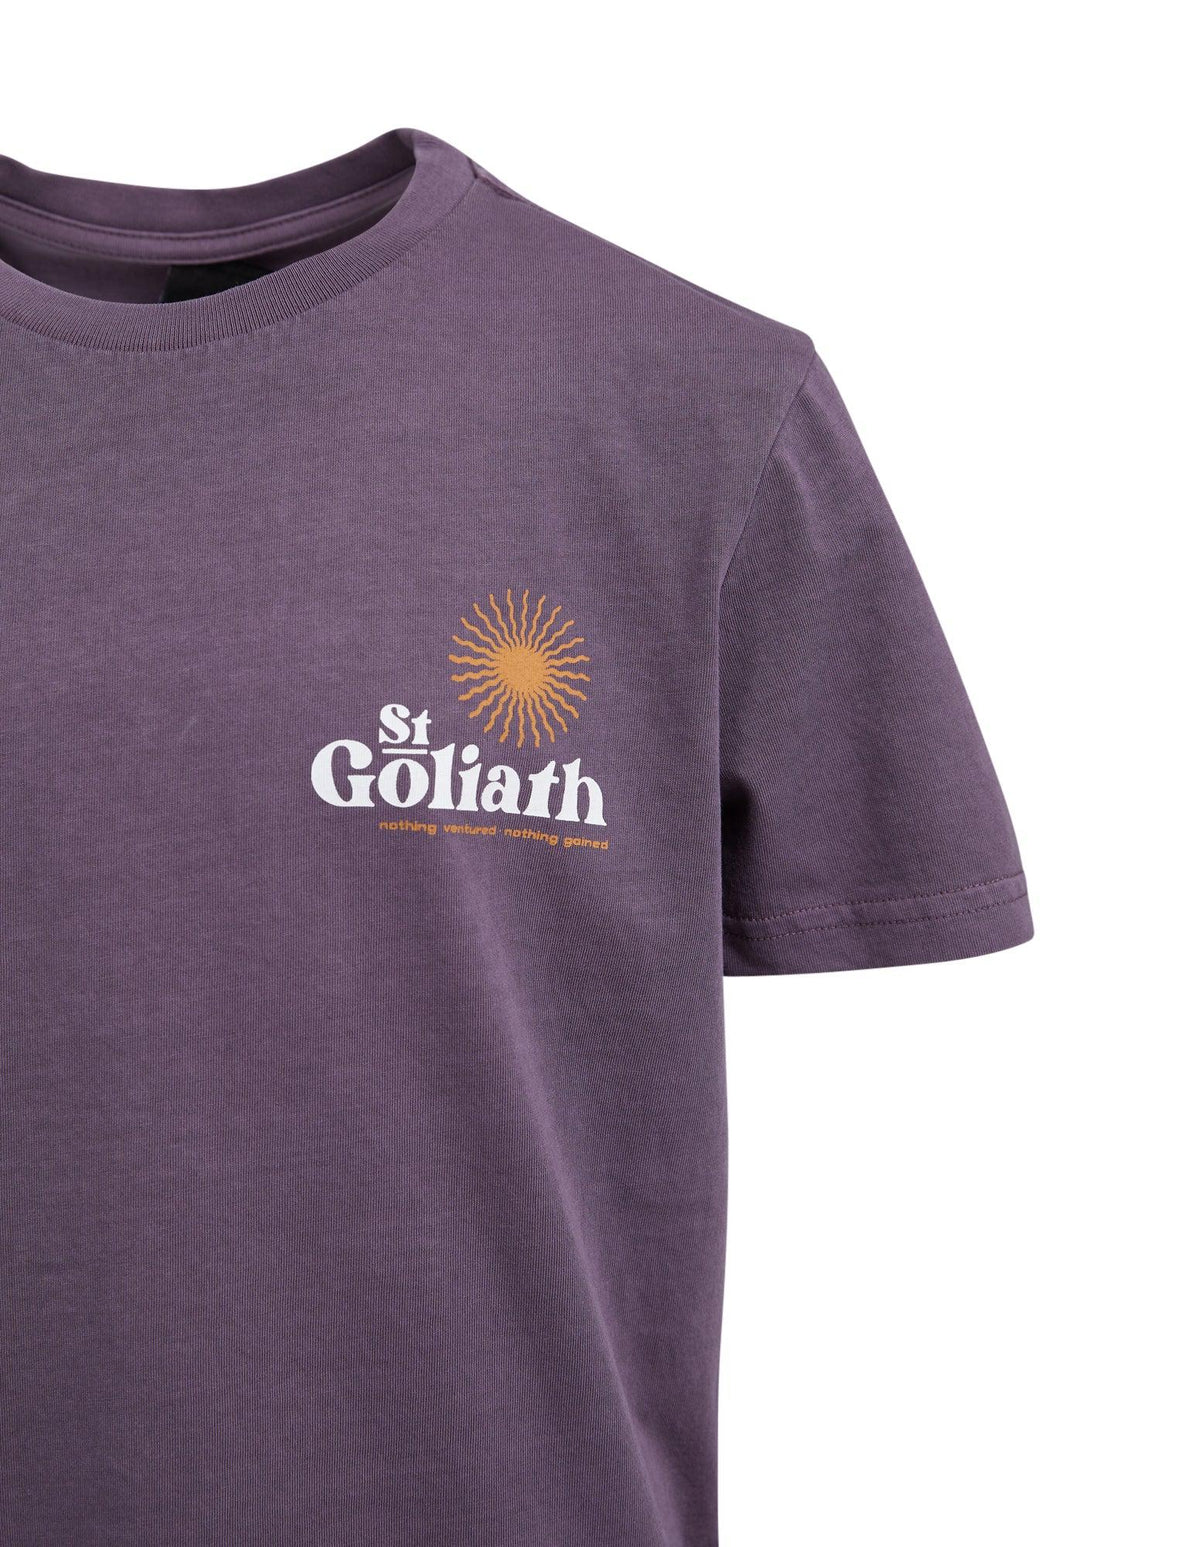 St Goliath 8-16-Arizona Tee Plum-Edge Clothing